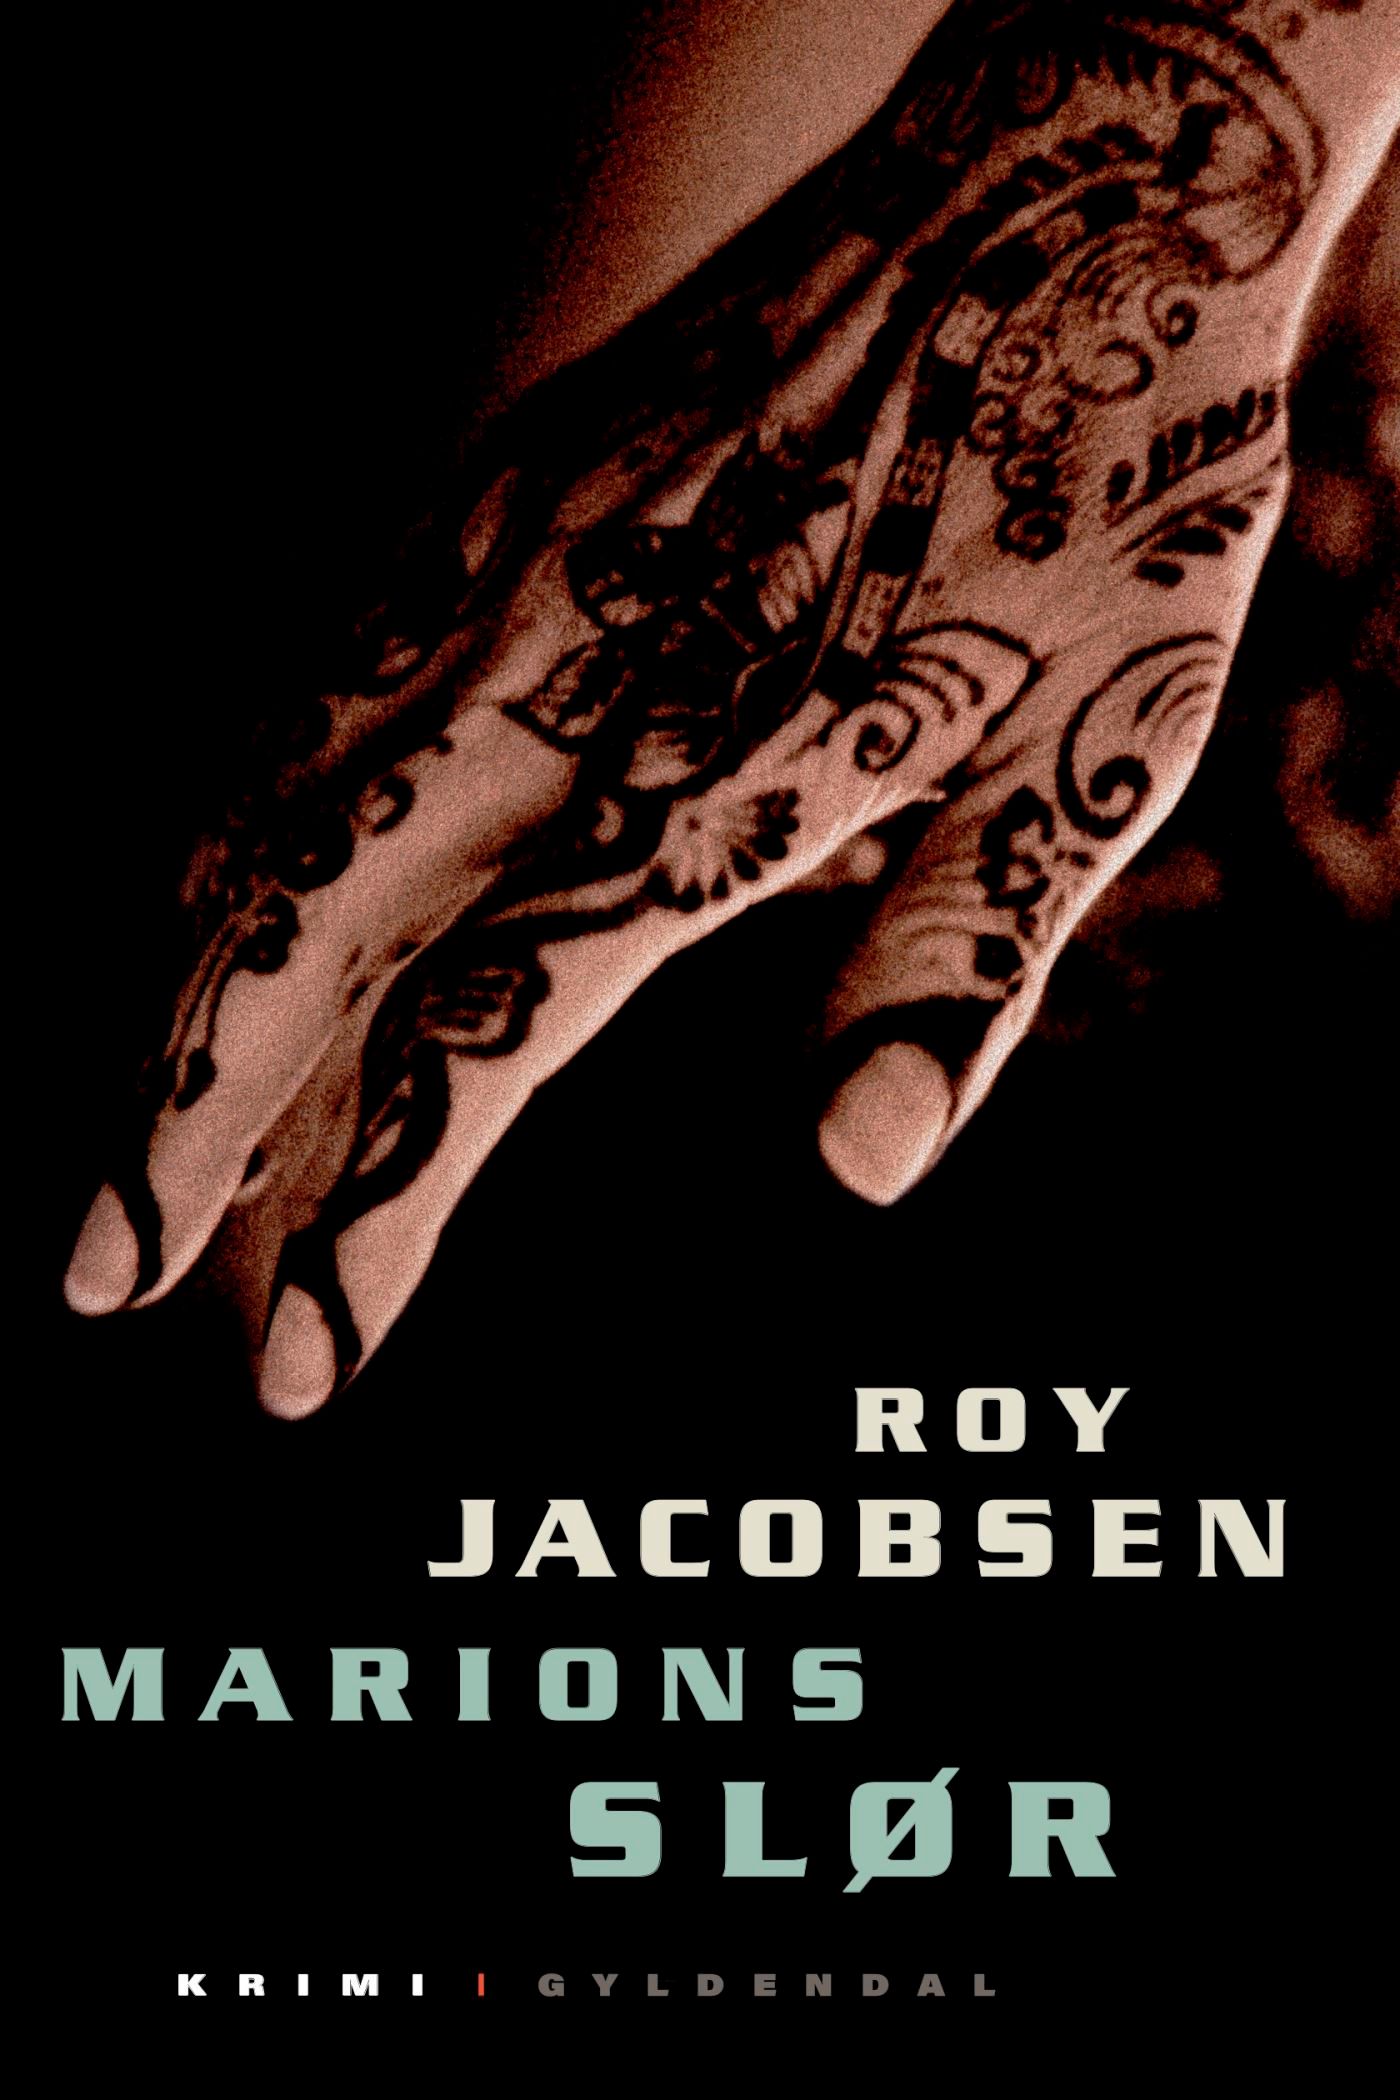 Marions slør, audiobook by Roy Jacobsen